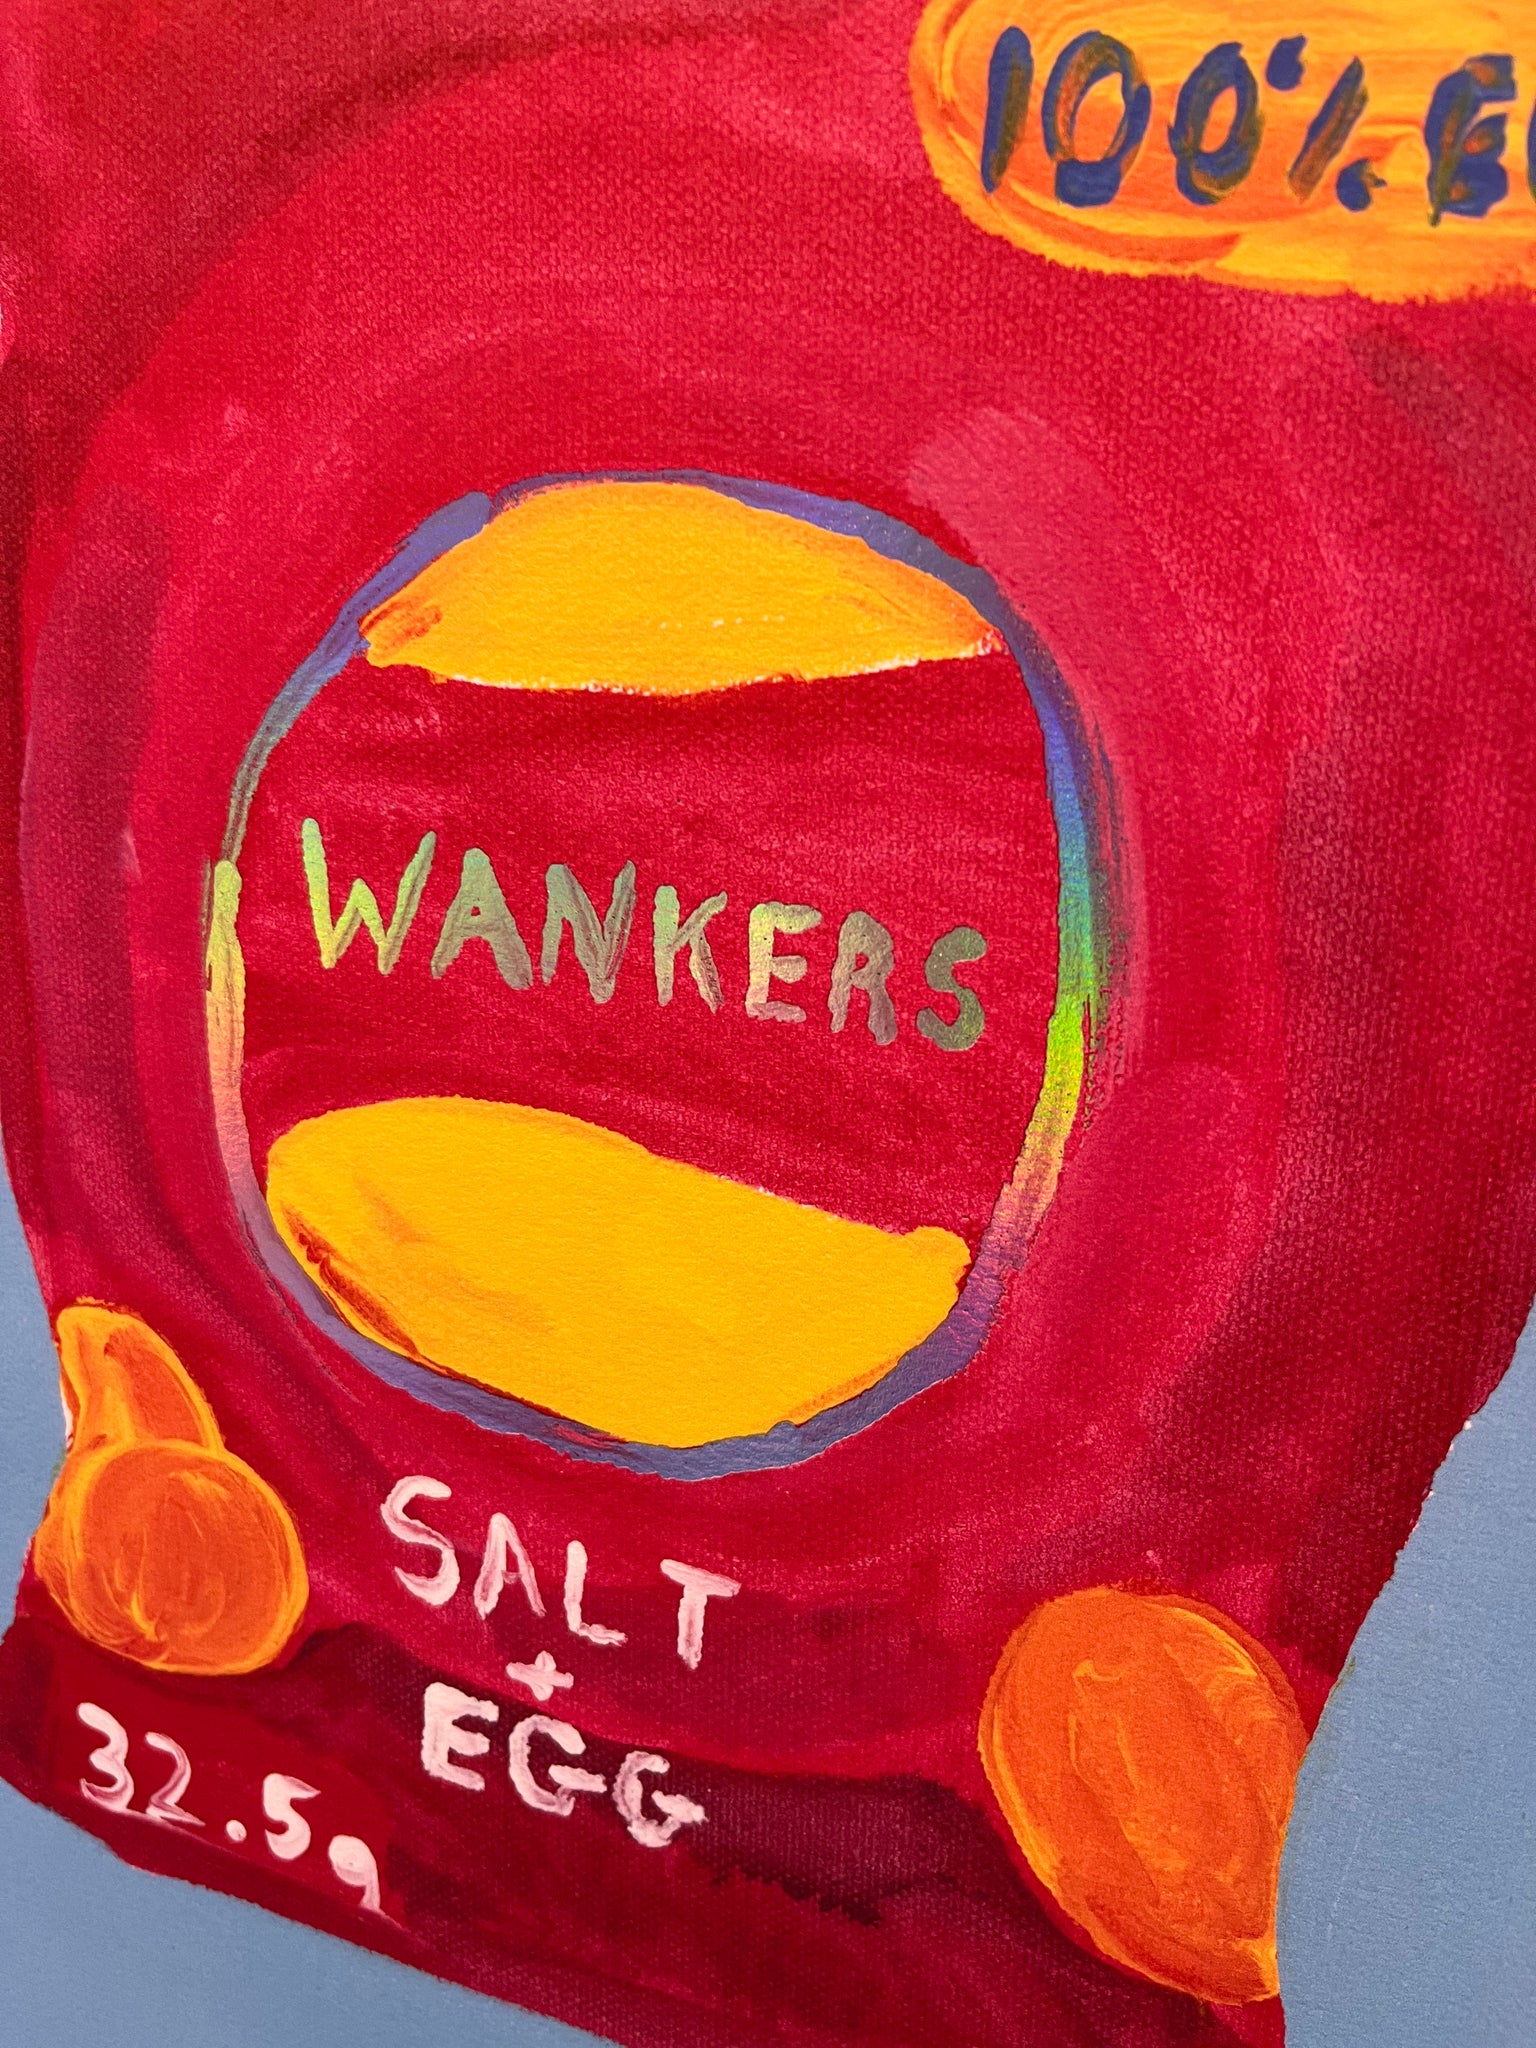 Wankers Salt + Egg